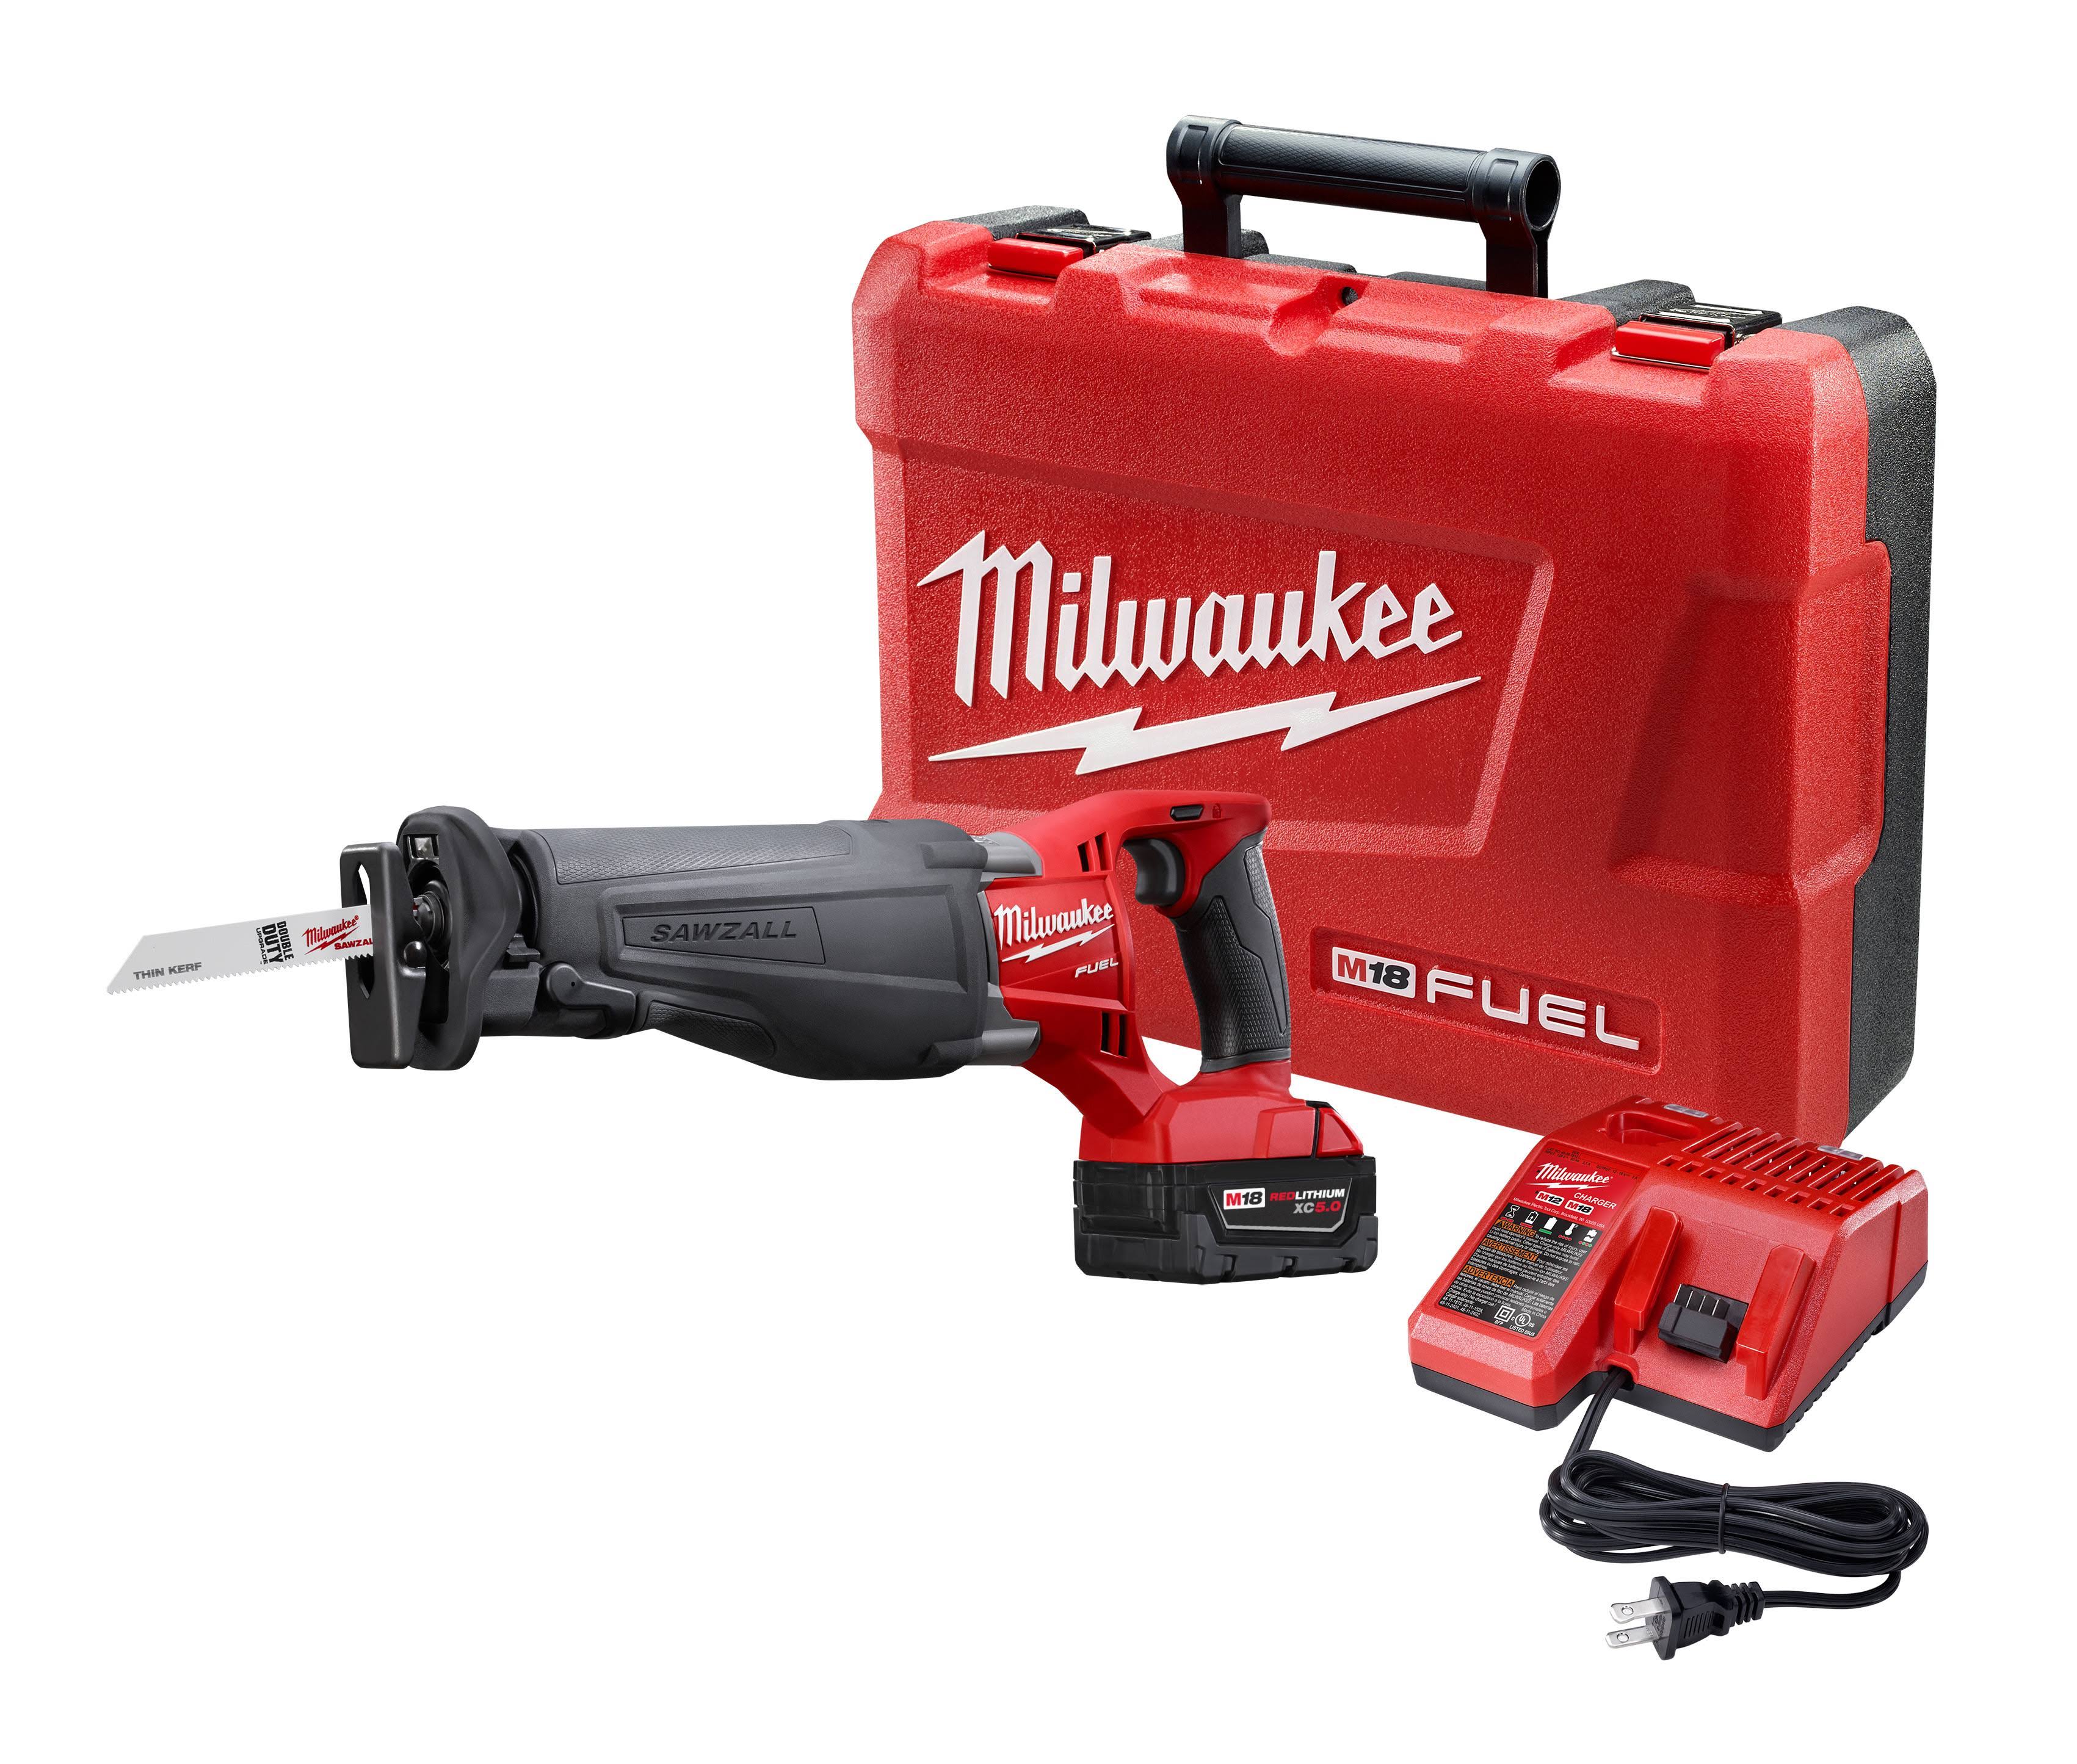 Milwaukee M18 Fuel Sawzall Reciprocating Saw Kit with Battery